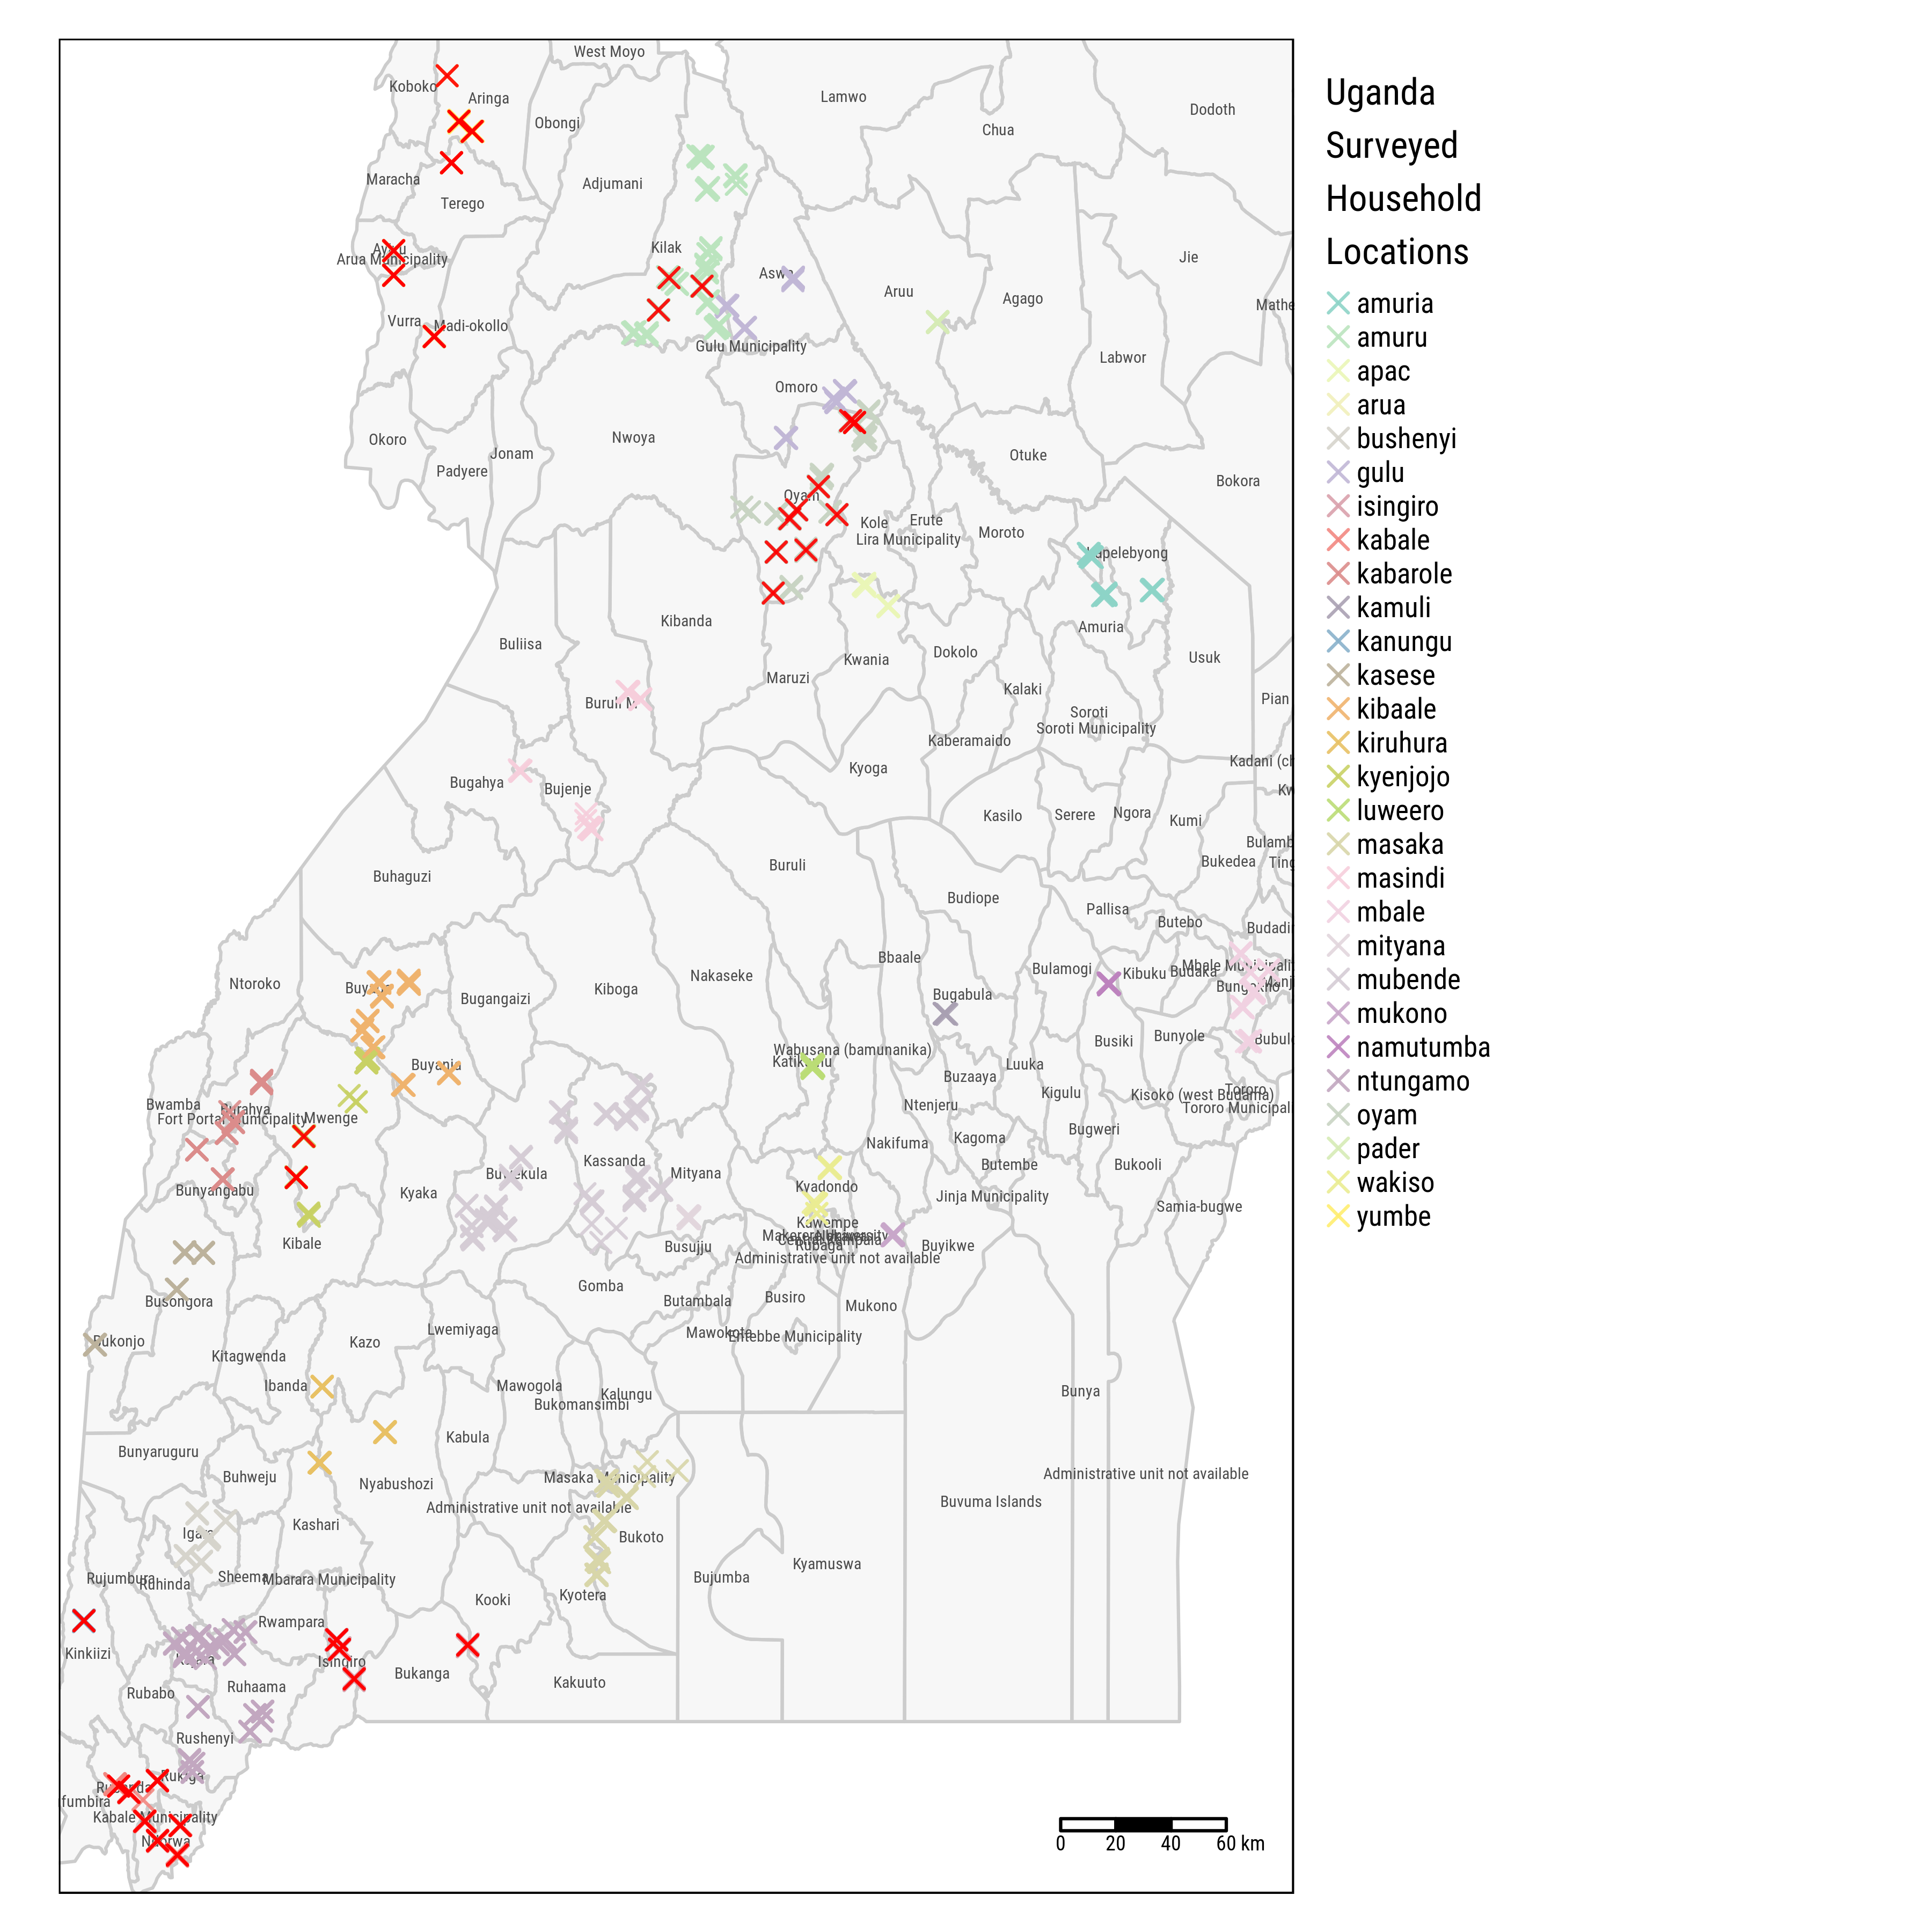 Households Locations across Districts, Uganda